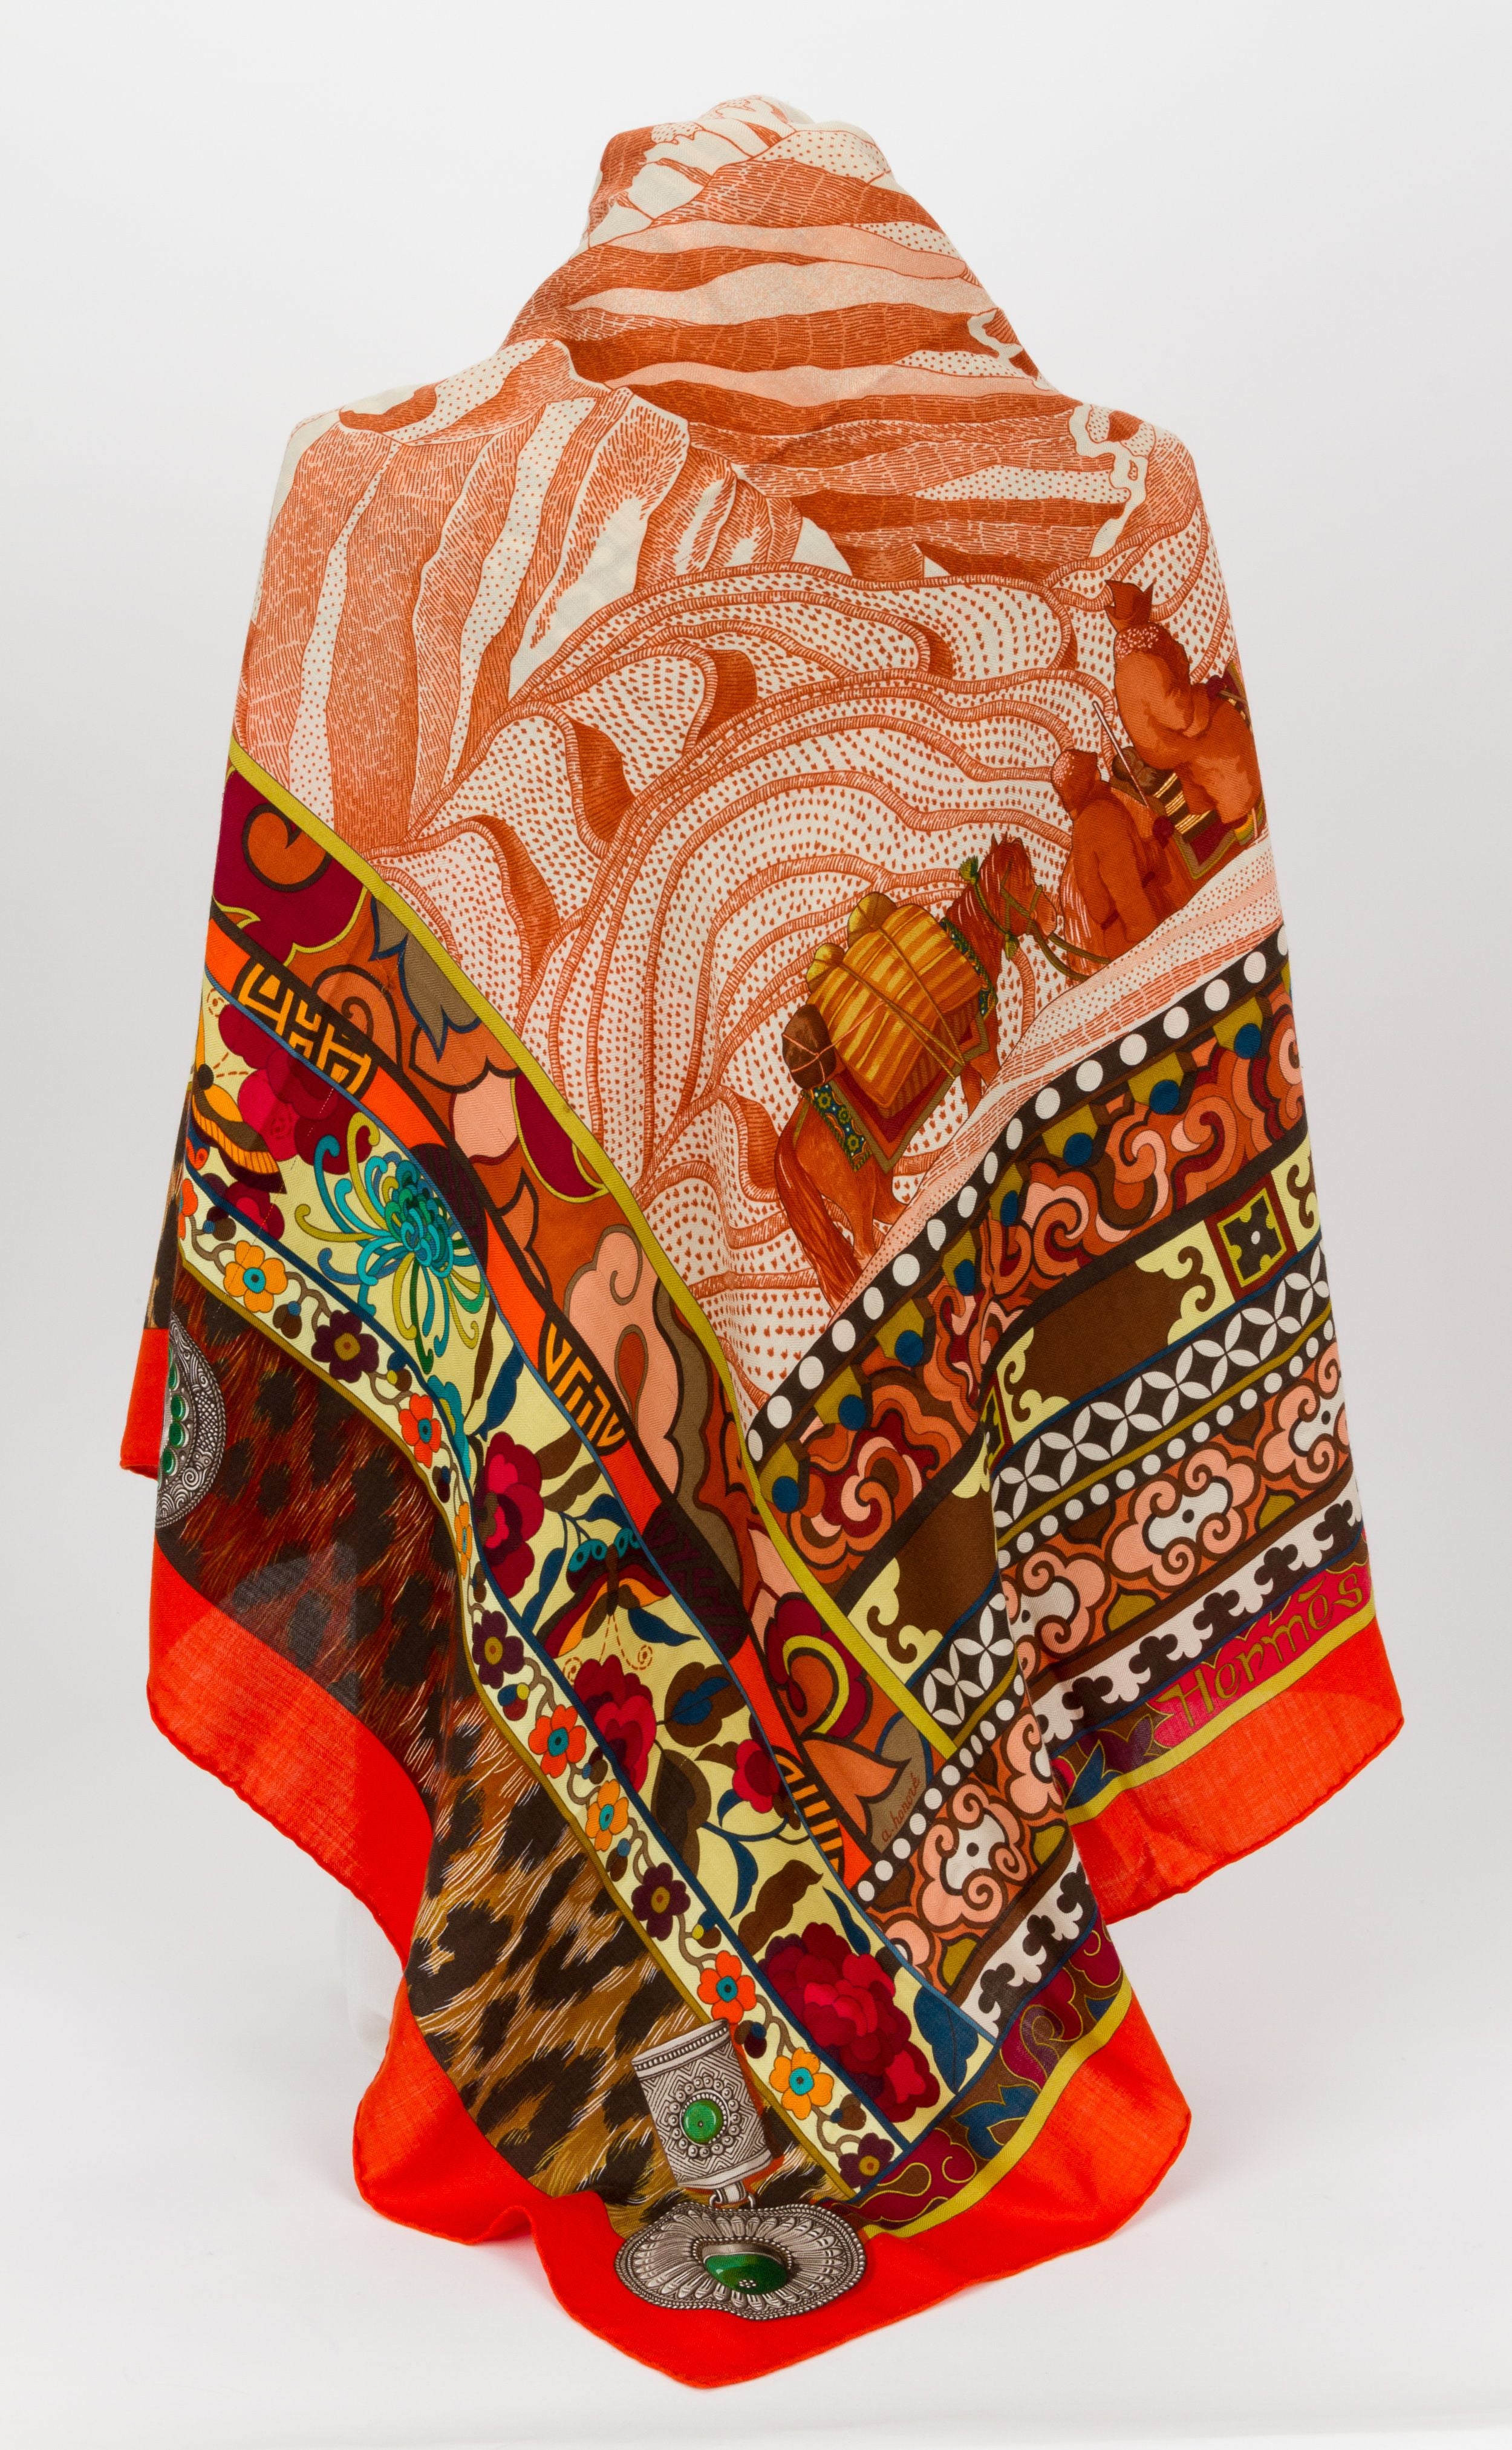 The Mini Leopard print silk and cashmere scarf